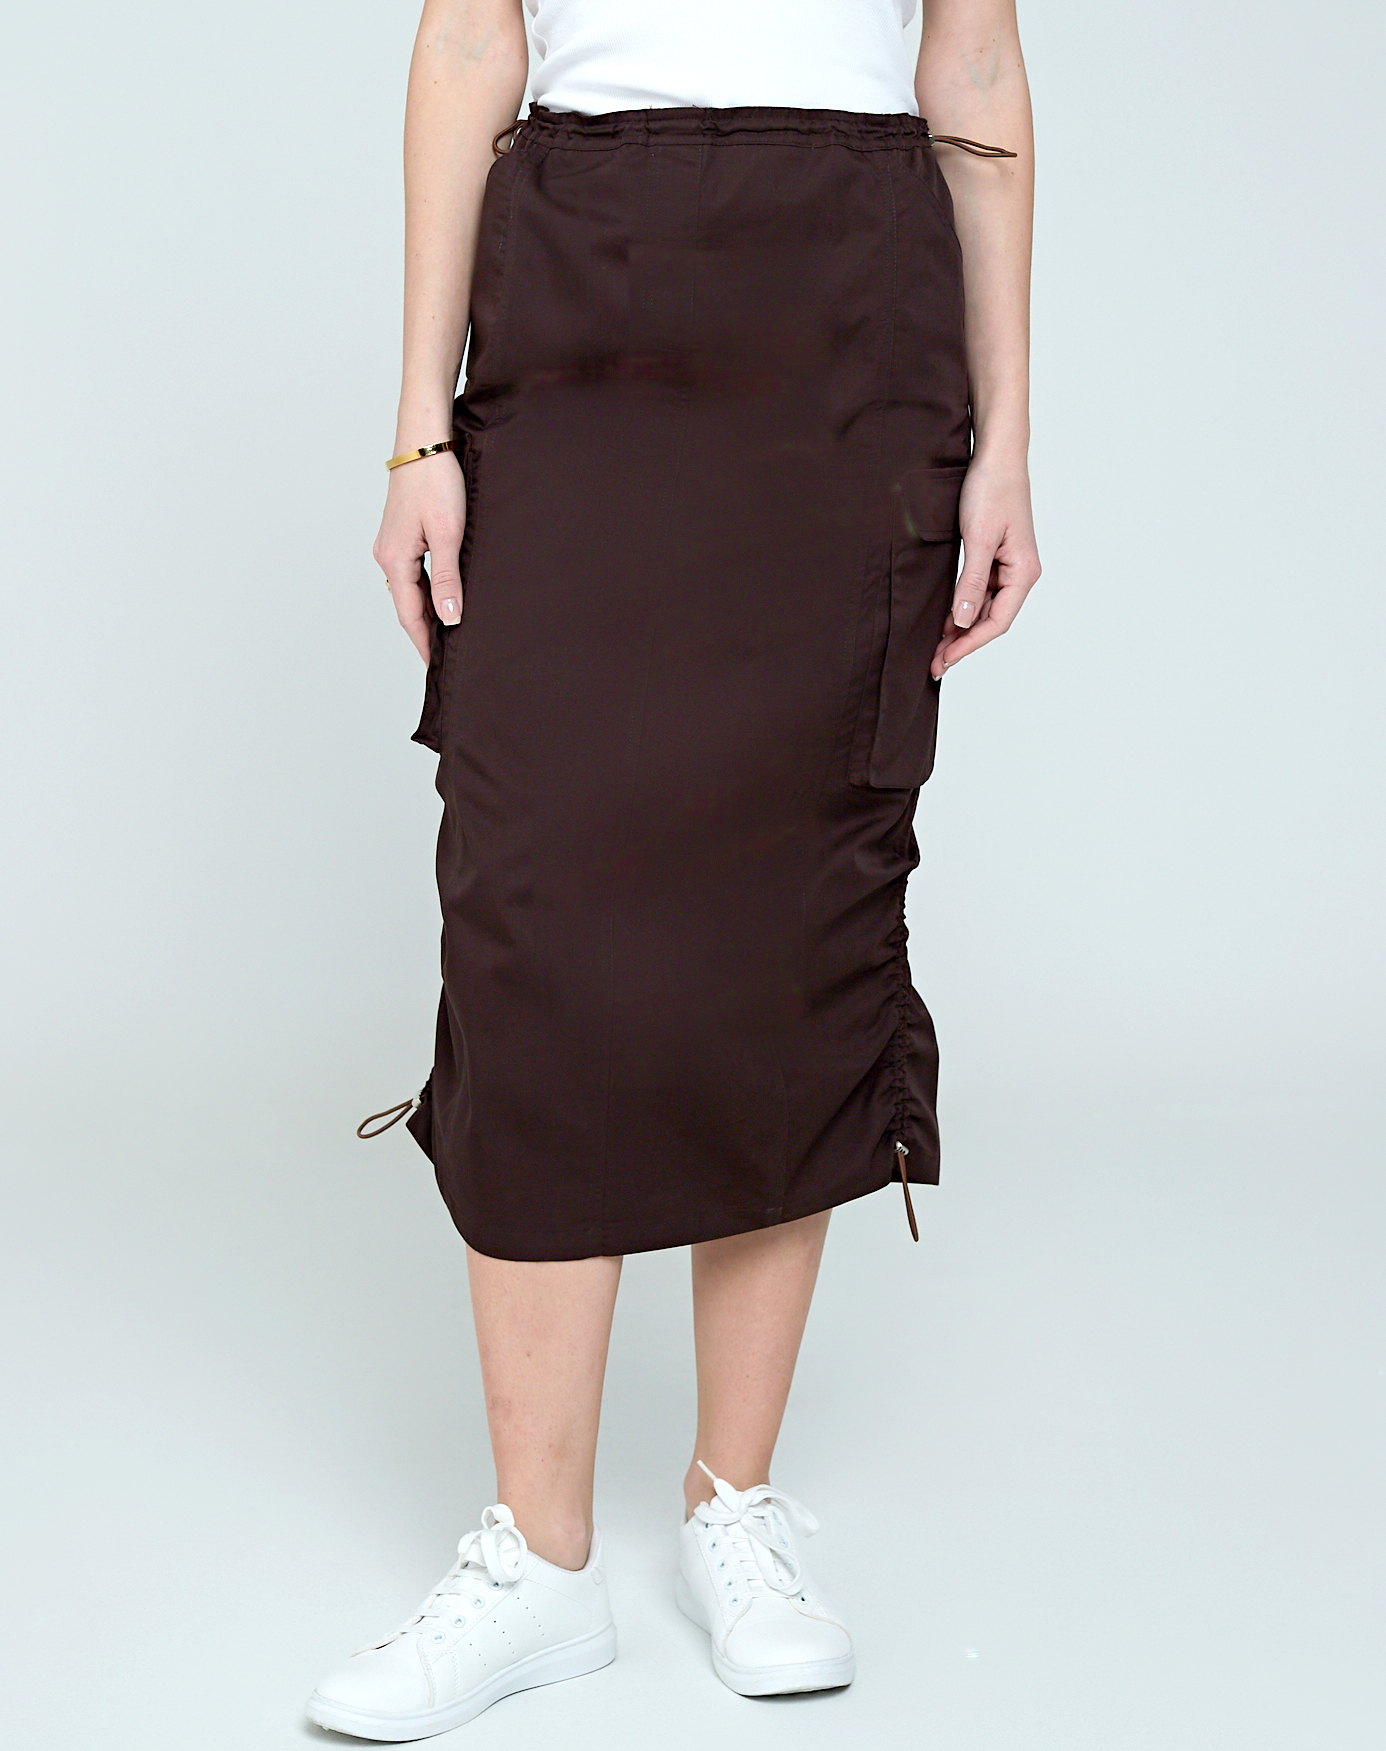 Юбка женская IRINA EGOROVA Cargo Skirt коричневая 42 RU